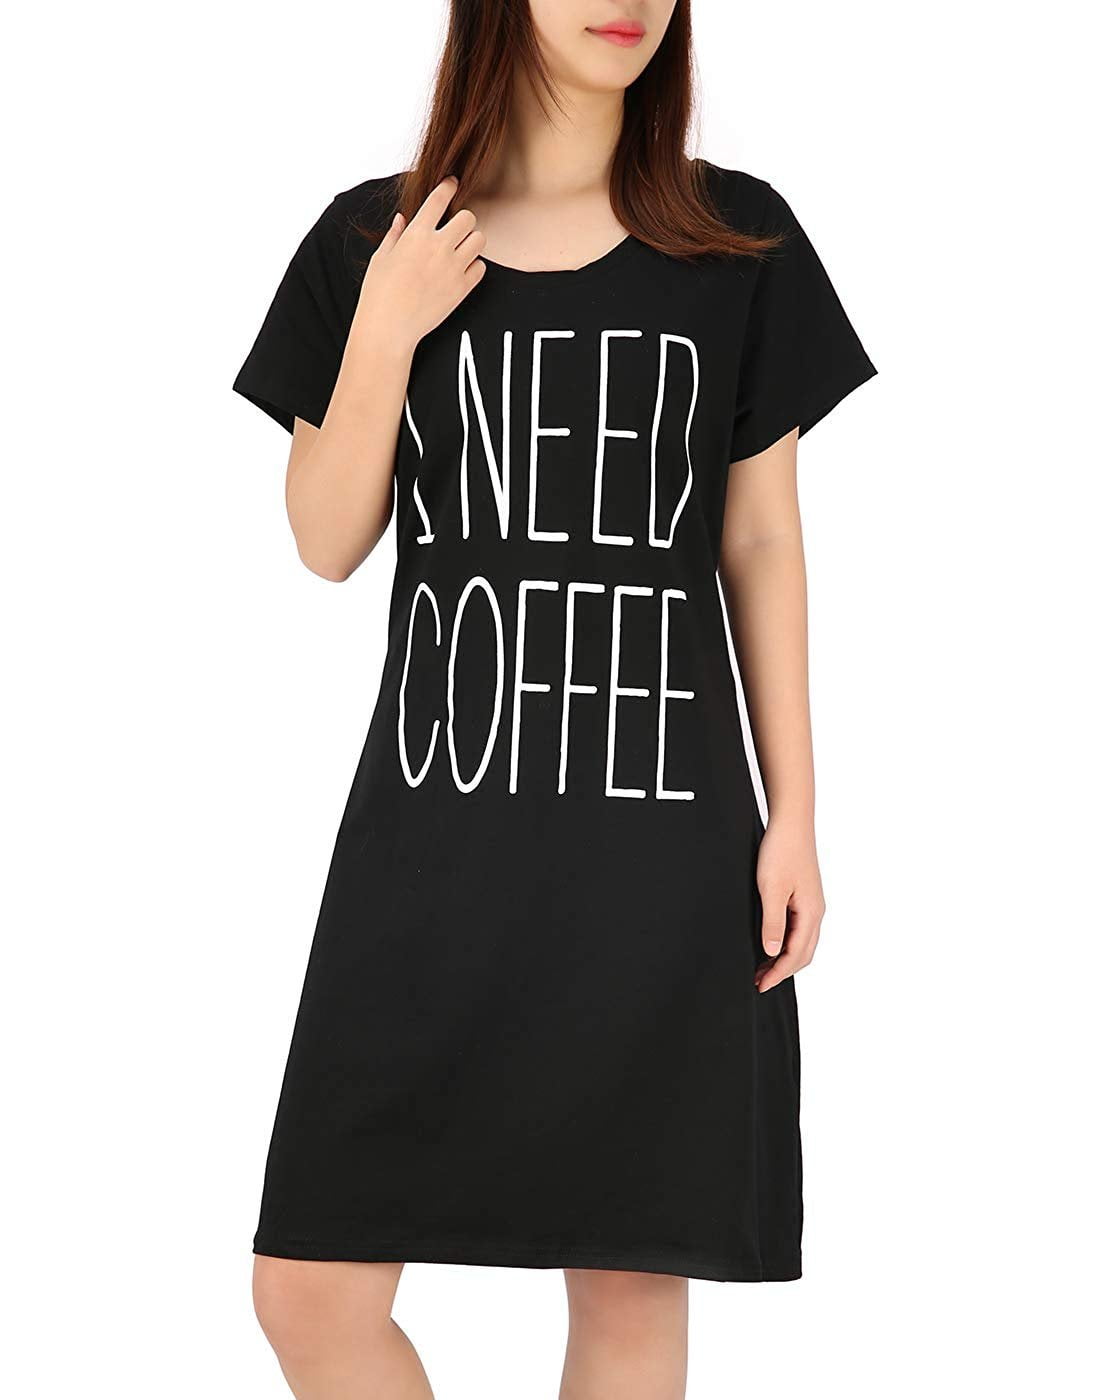 HDE Womens Sleepwear Cotton Nightgowns Long Sleeve Sleepshirt Print Night Shirt S-5X 